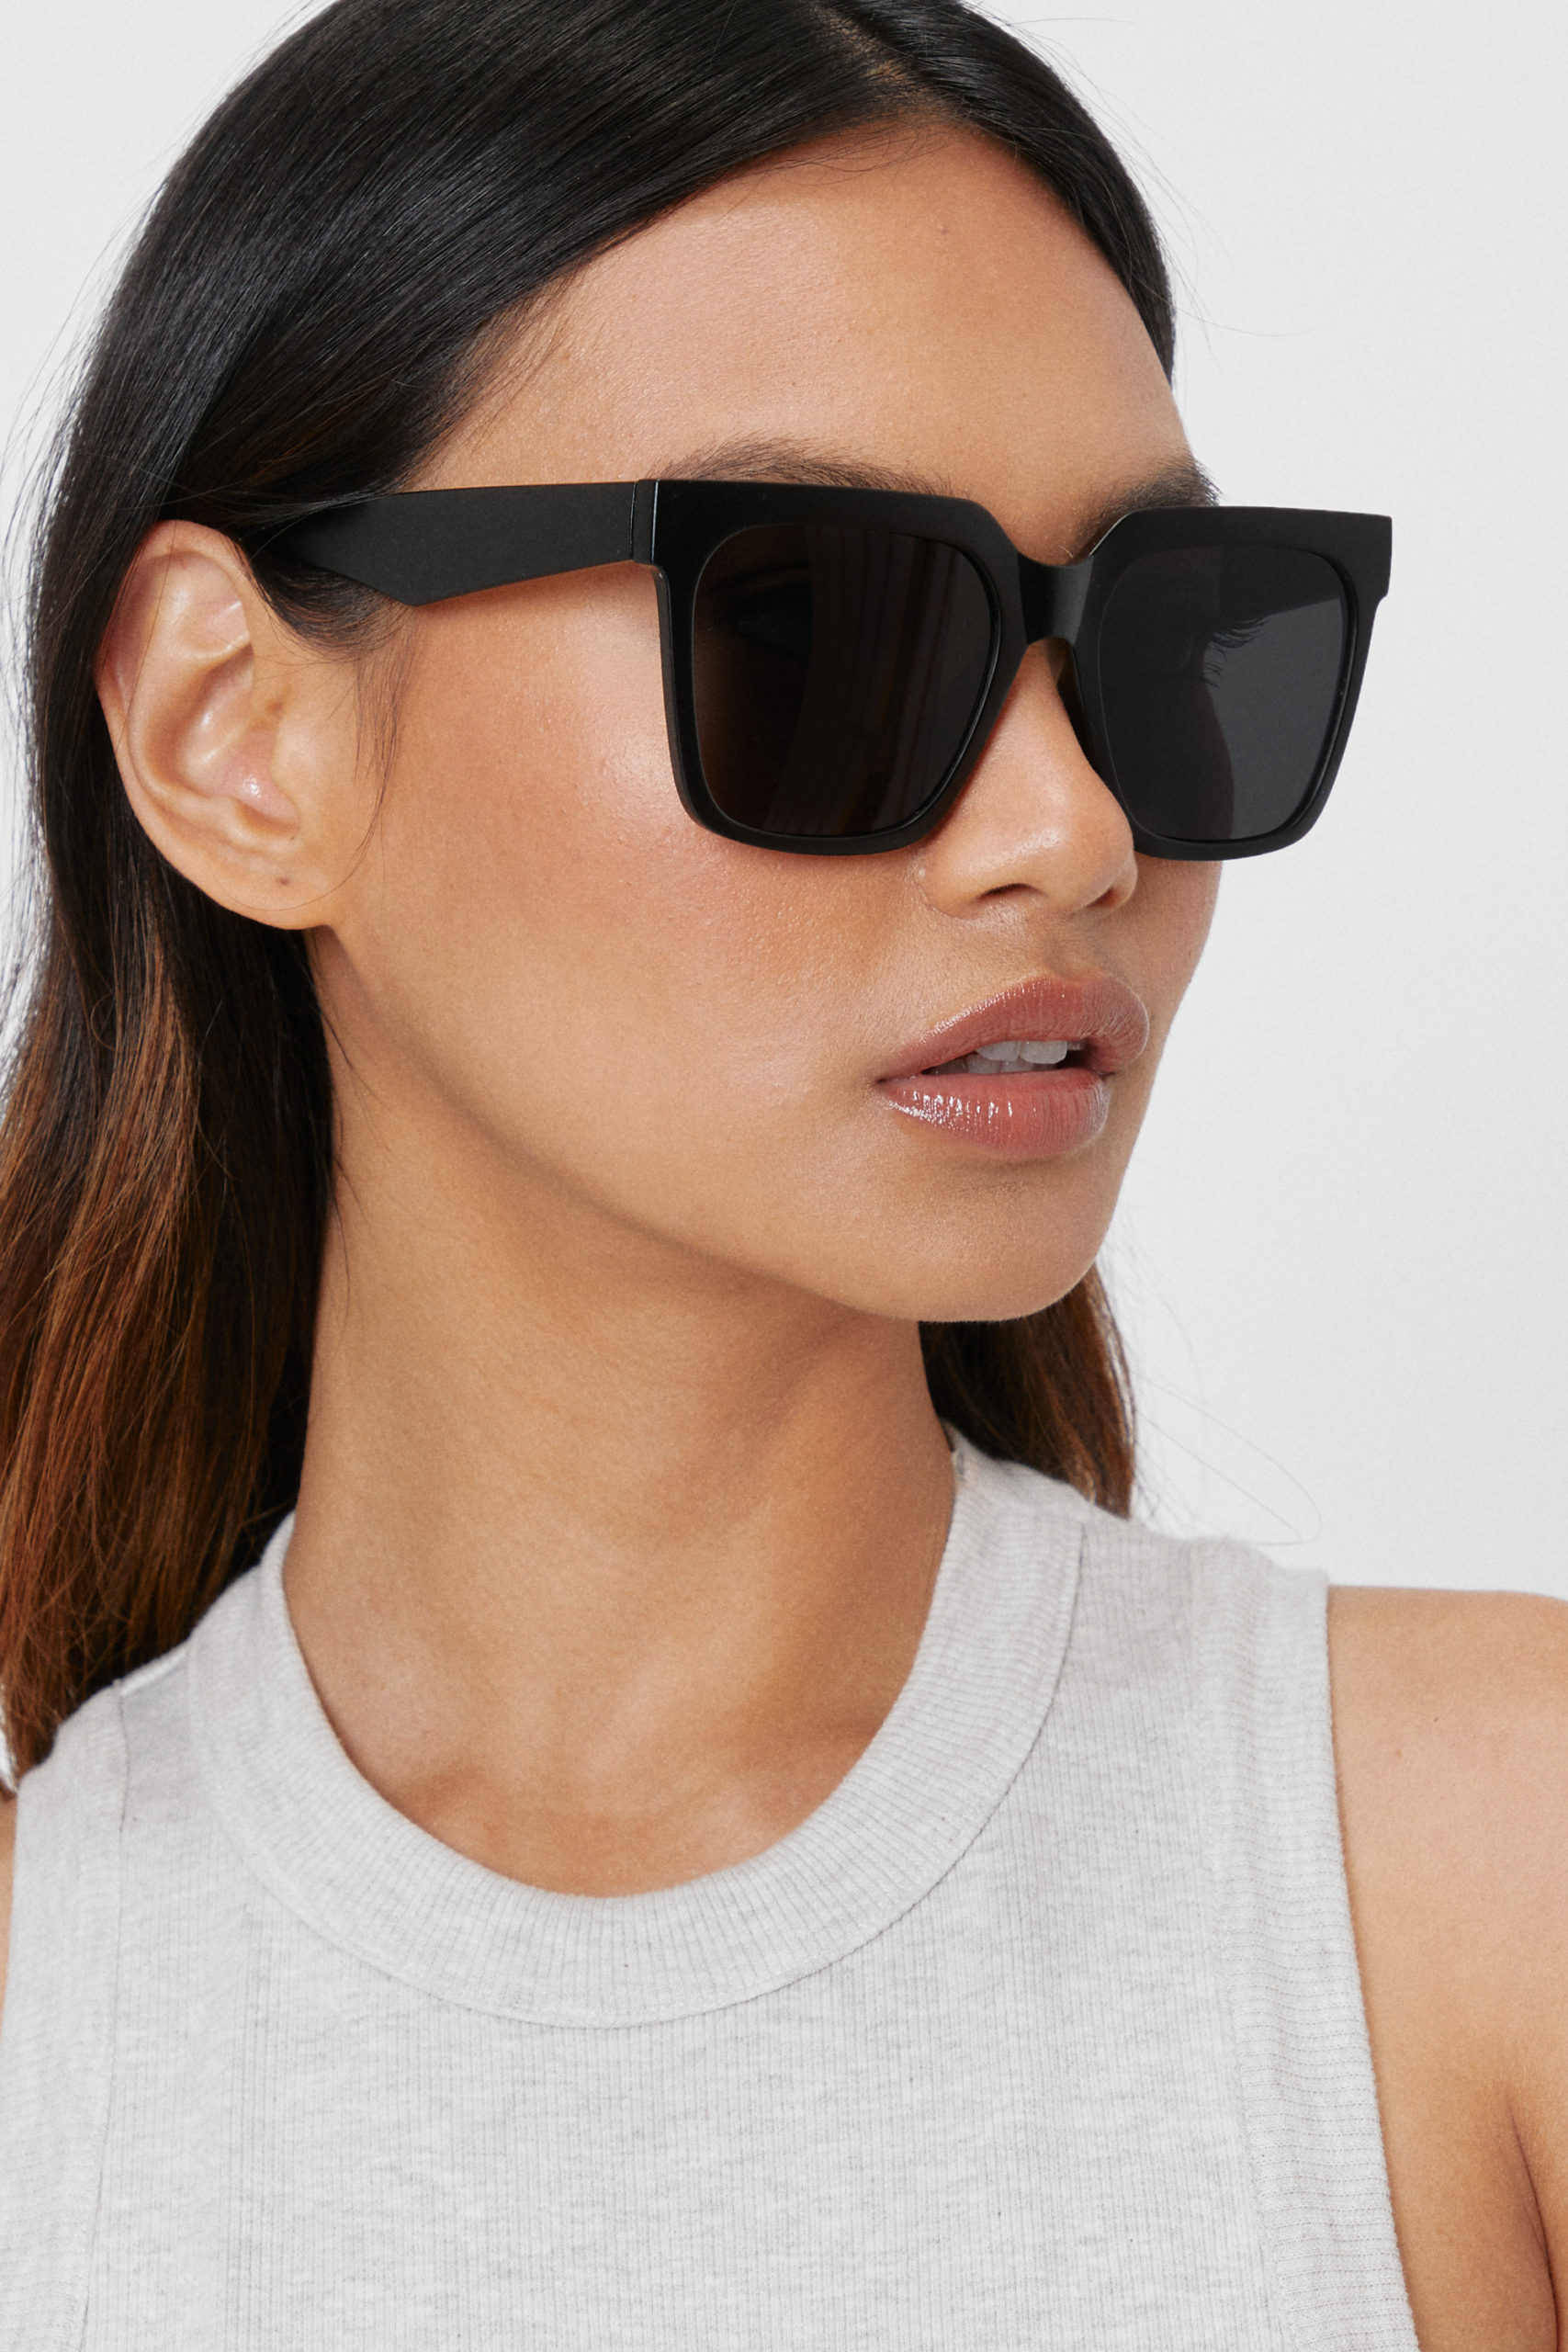 New sunglasses trend???-mncb.edu.vn